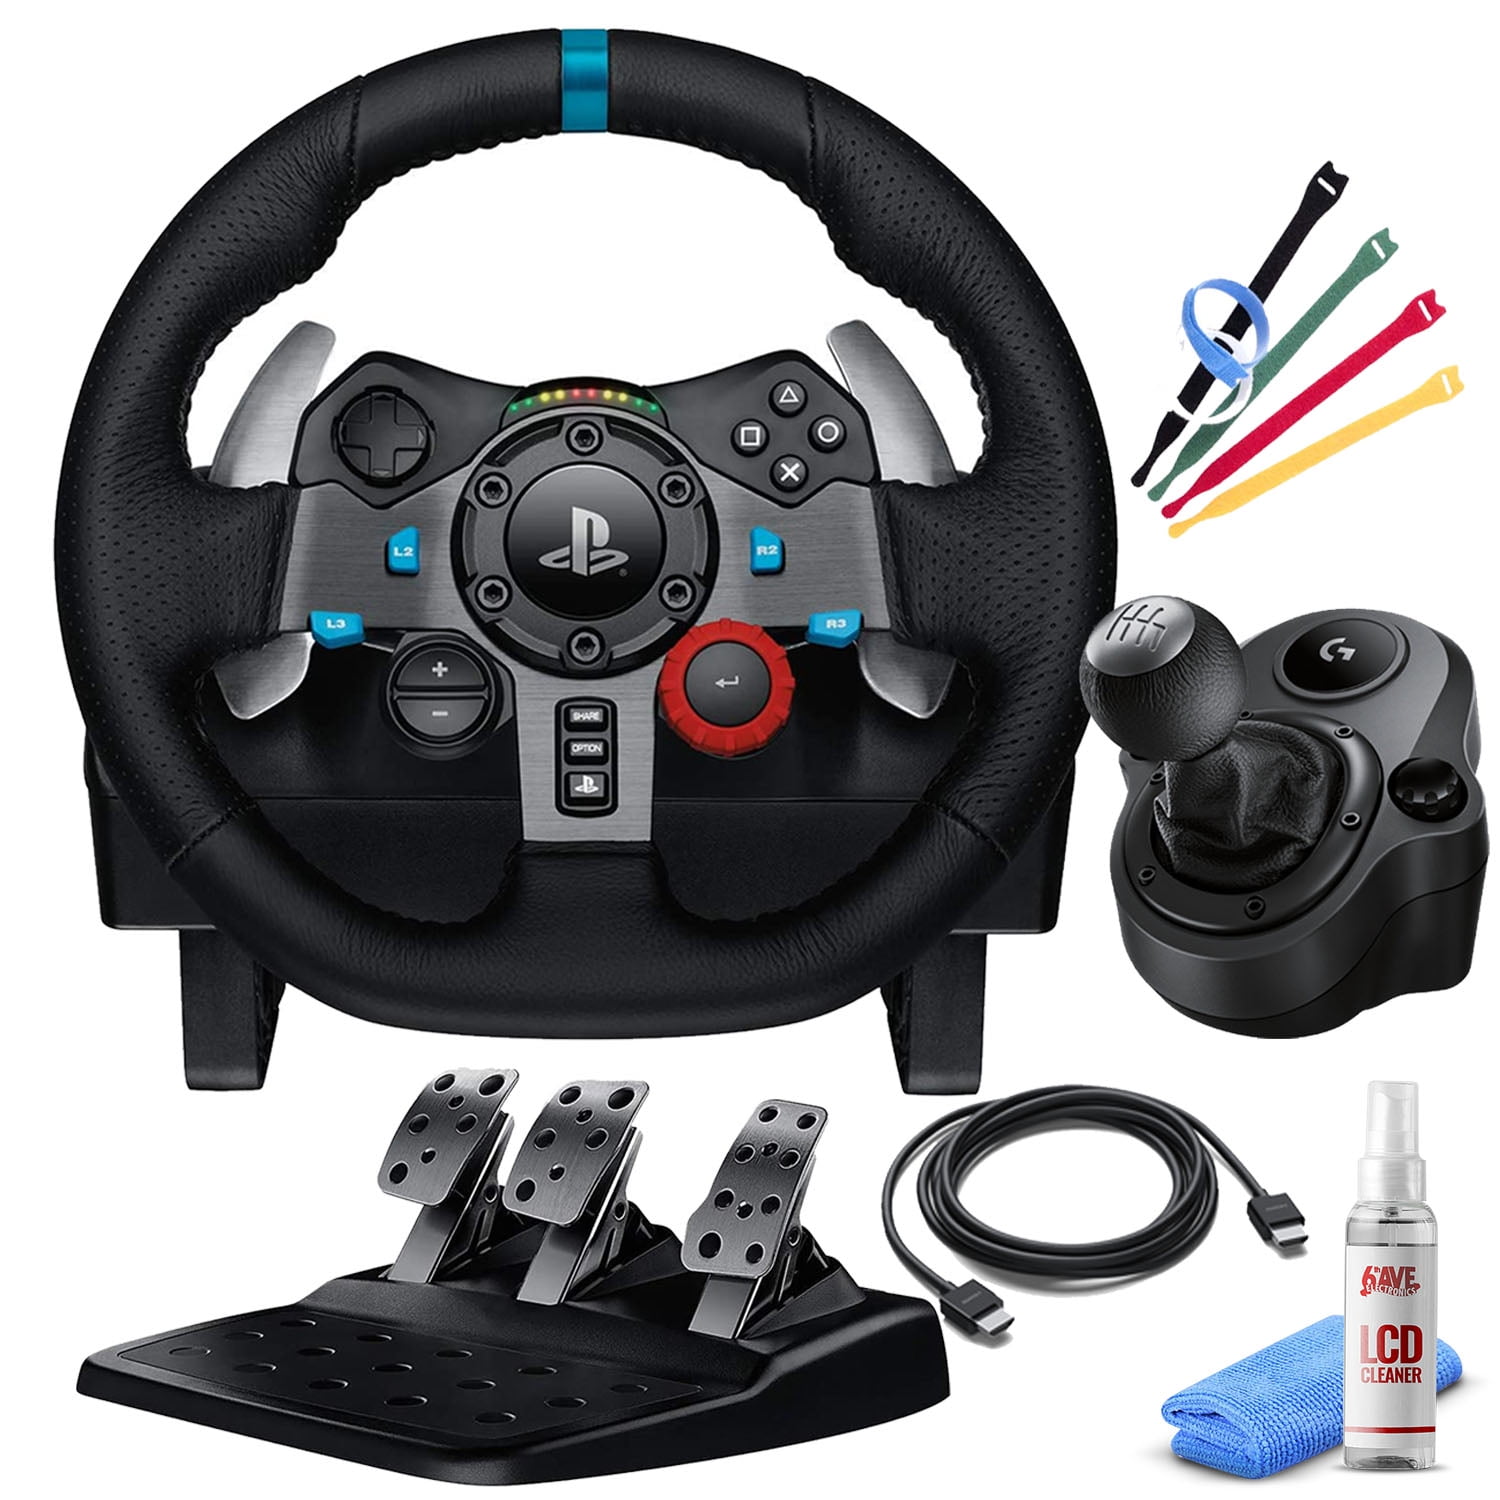 Logitech G27 Car Racing Sim Steering Wheel Pedals & Shifter Gear Box PS3 +  Gift